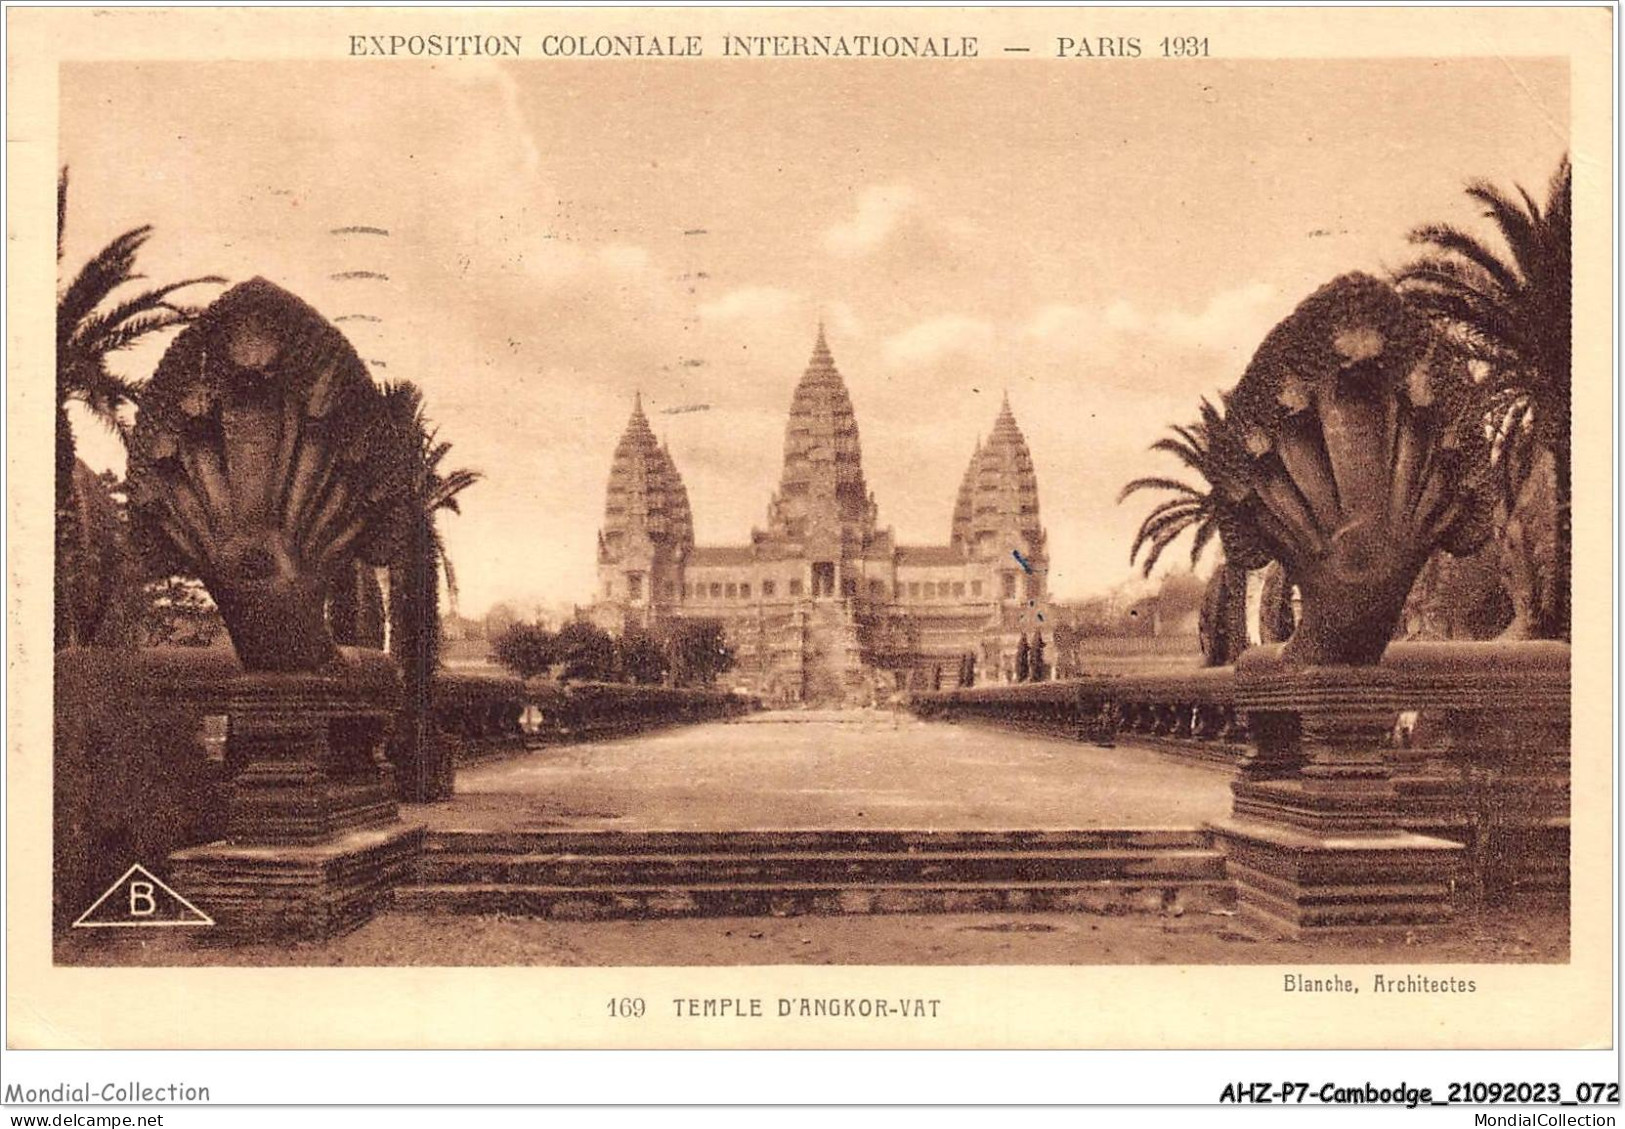 AHZP7-CAMBODGE-0632 - EXPOSITION COLONIALE INTERNATIONALE - PARIS 1931 - TEMPLE D'ANGKOR-VAT - Kambodscha